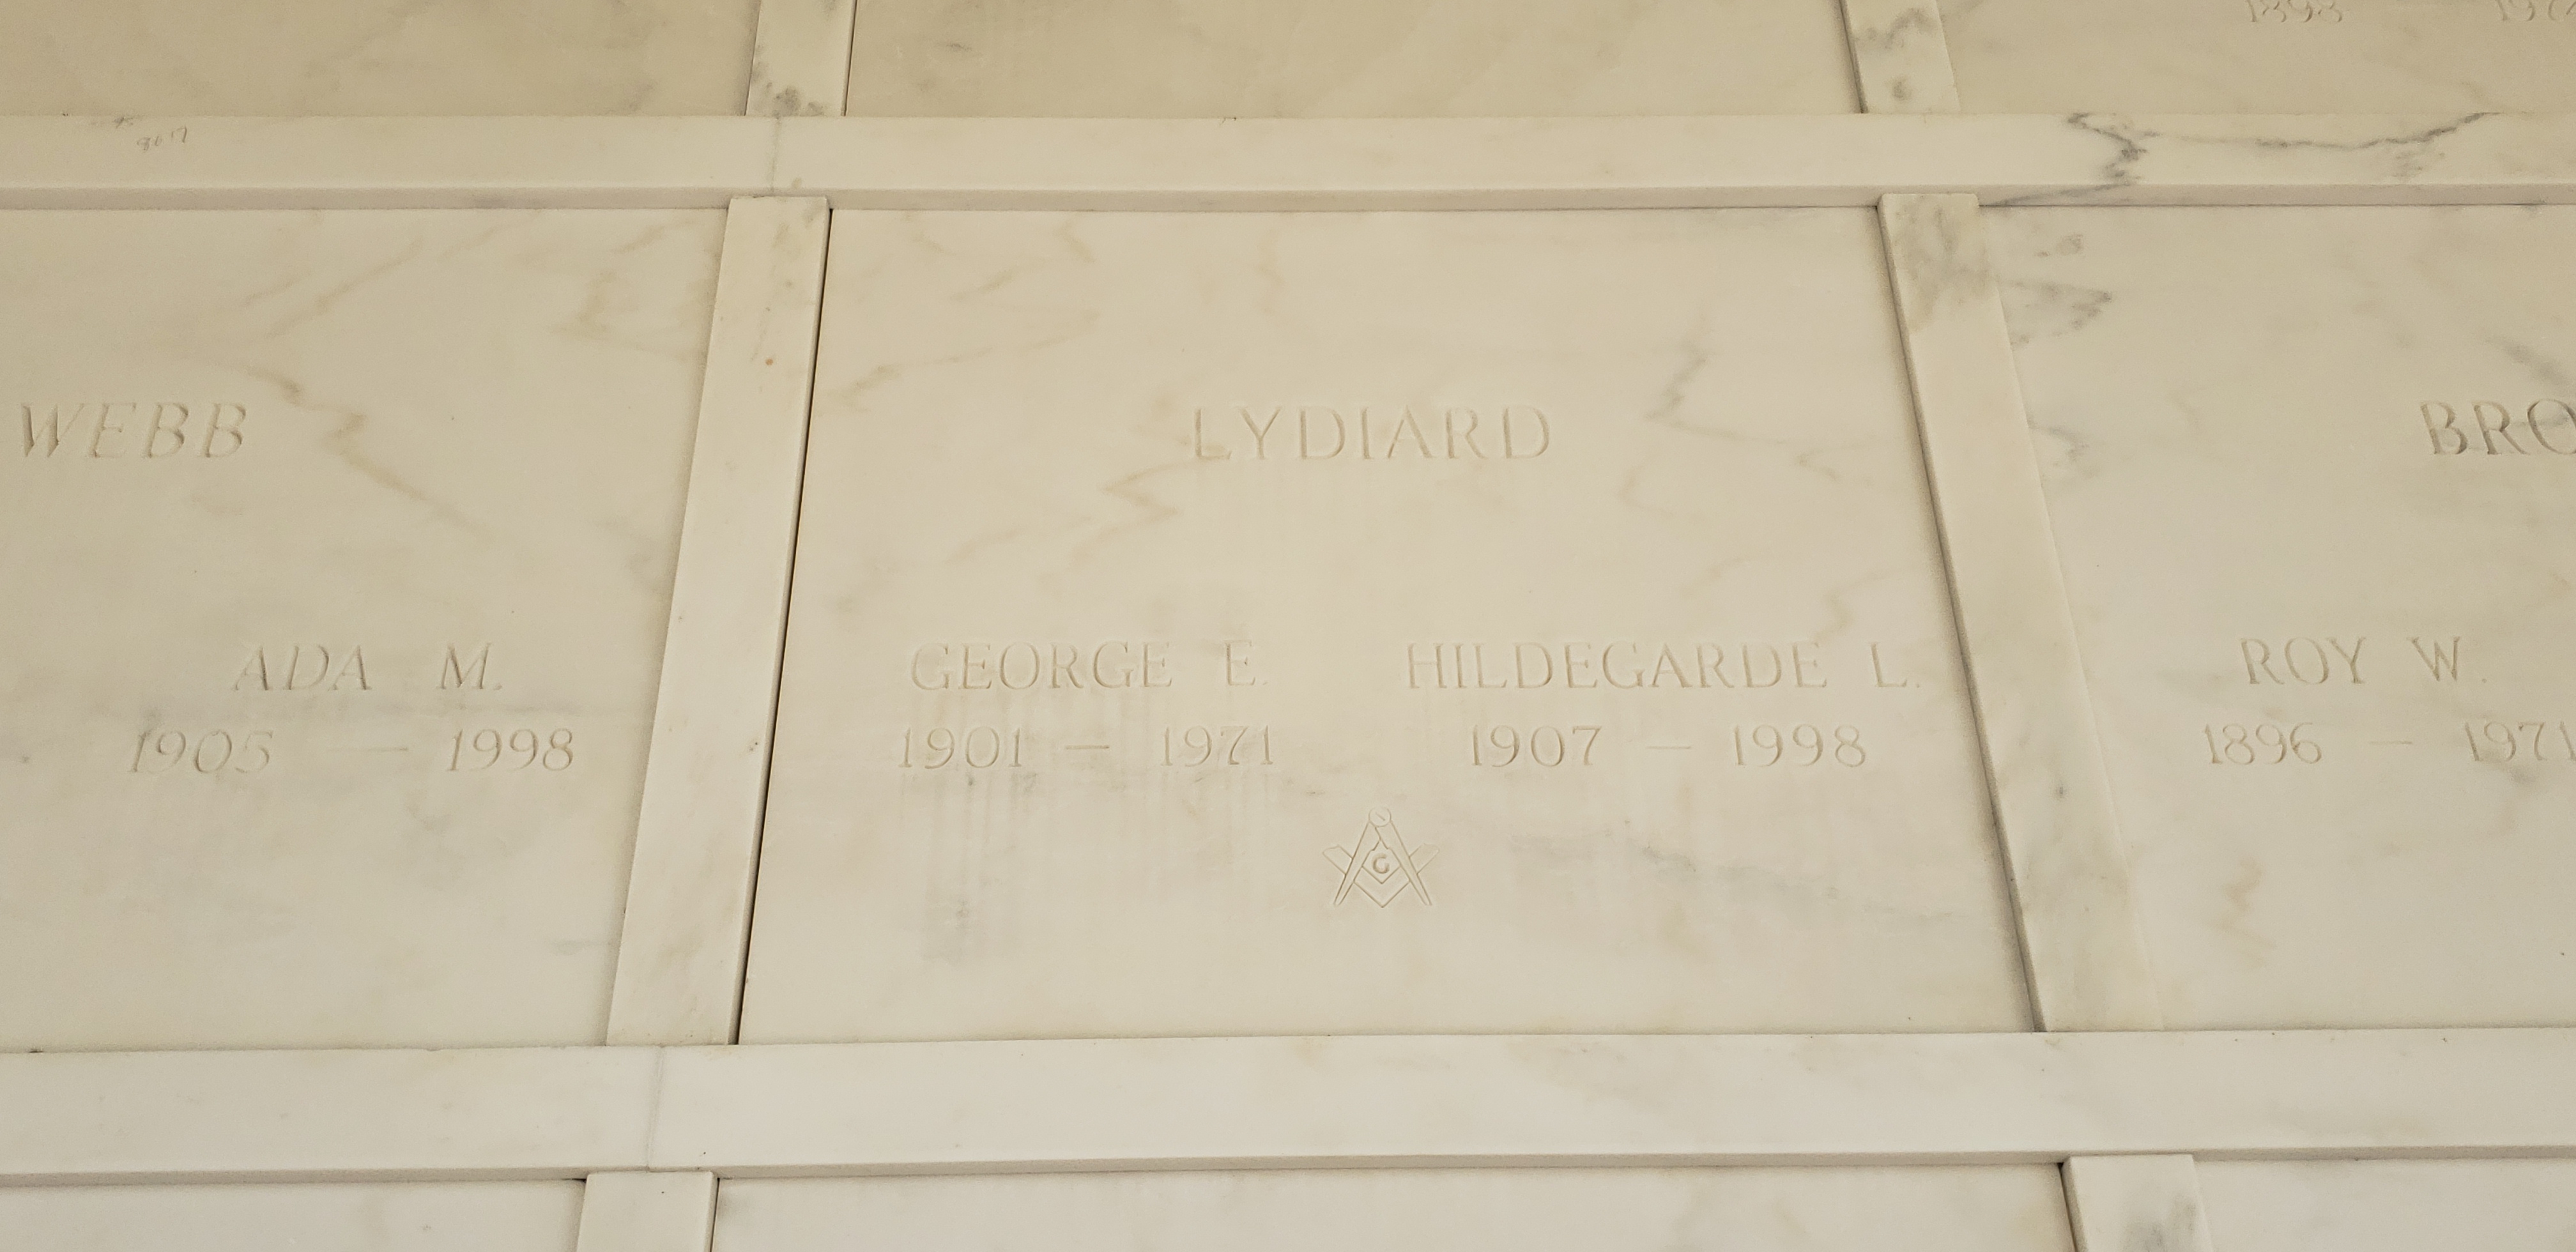 George E Lydiard